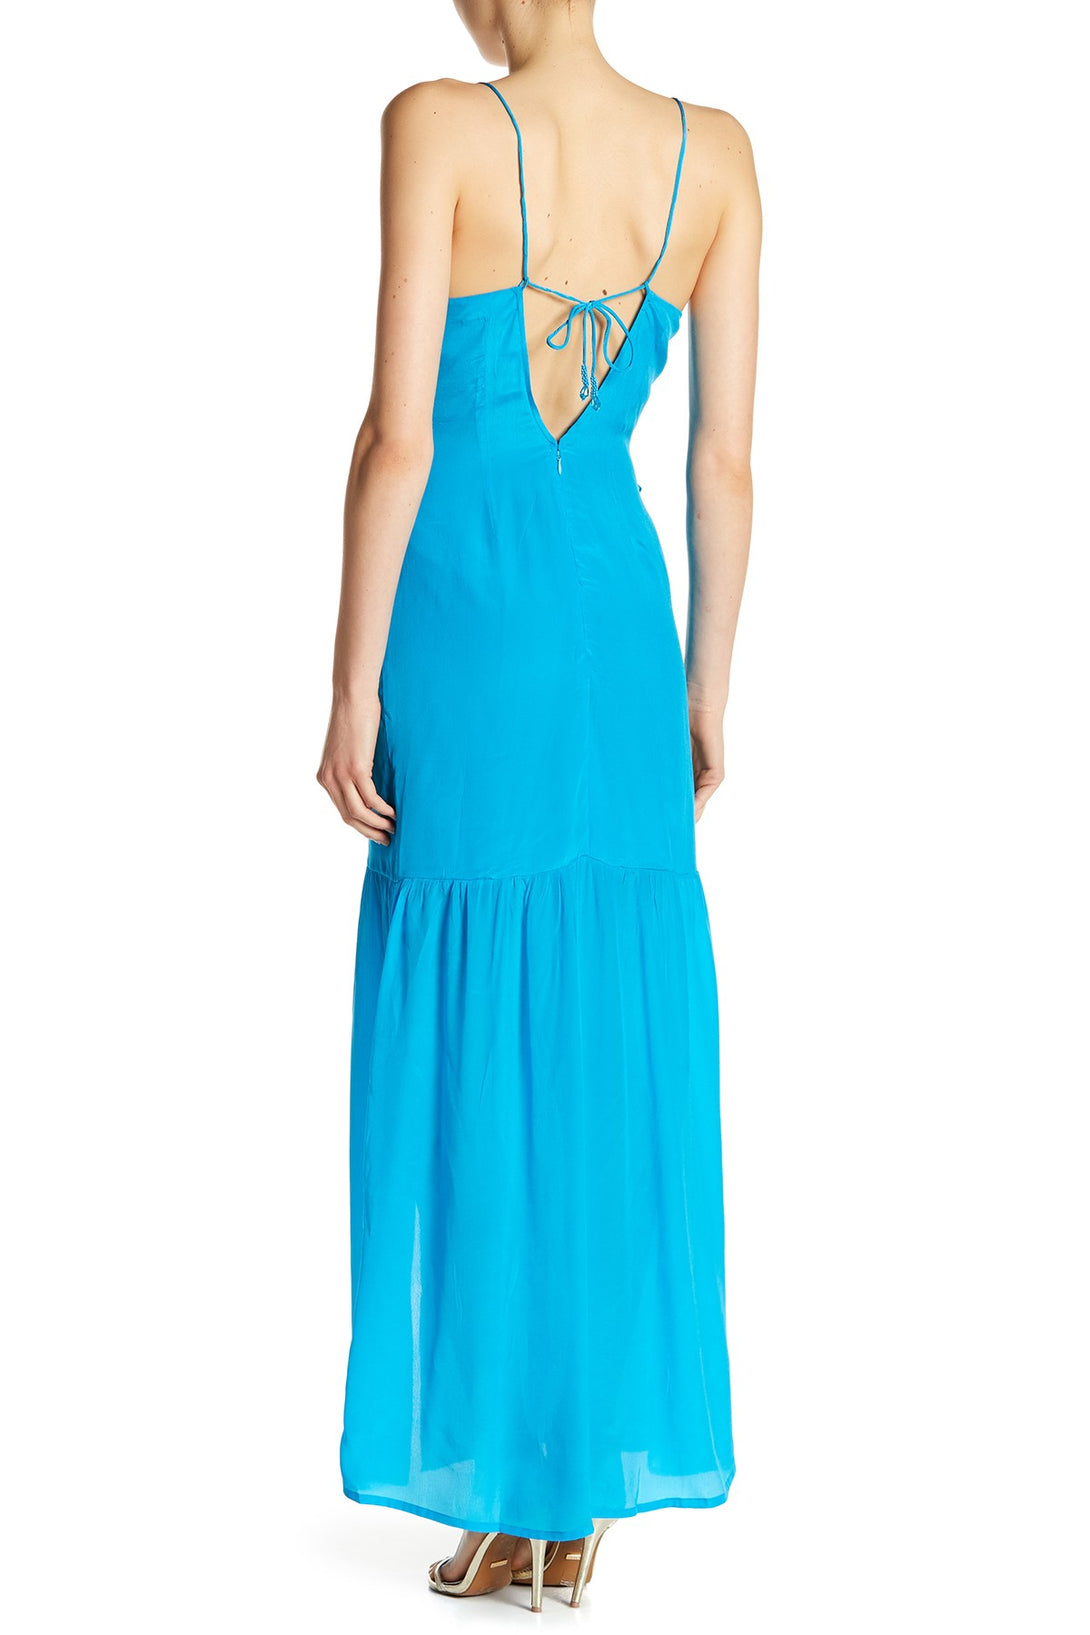  long blue formal dresses, plus size maxi dresses, Shahida Parides, long summer dresses, summer maxi dress,